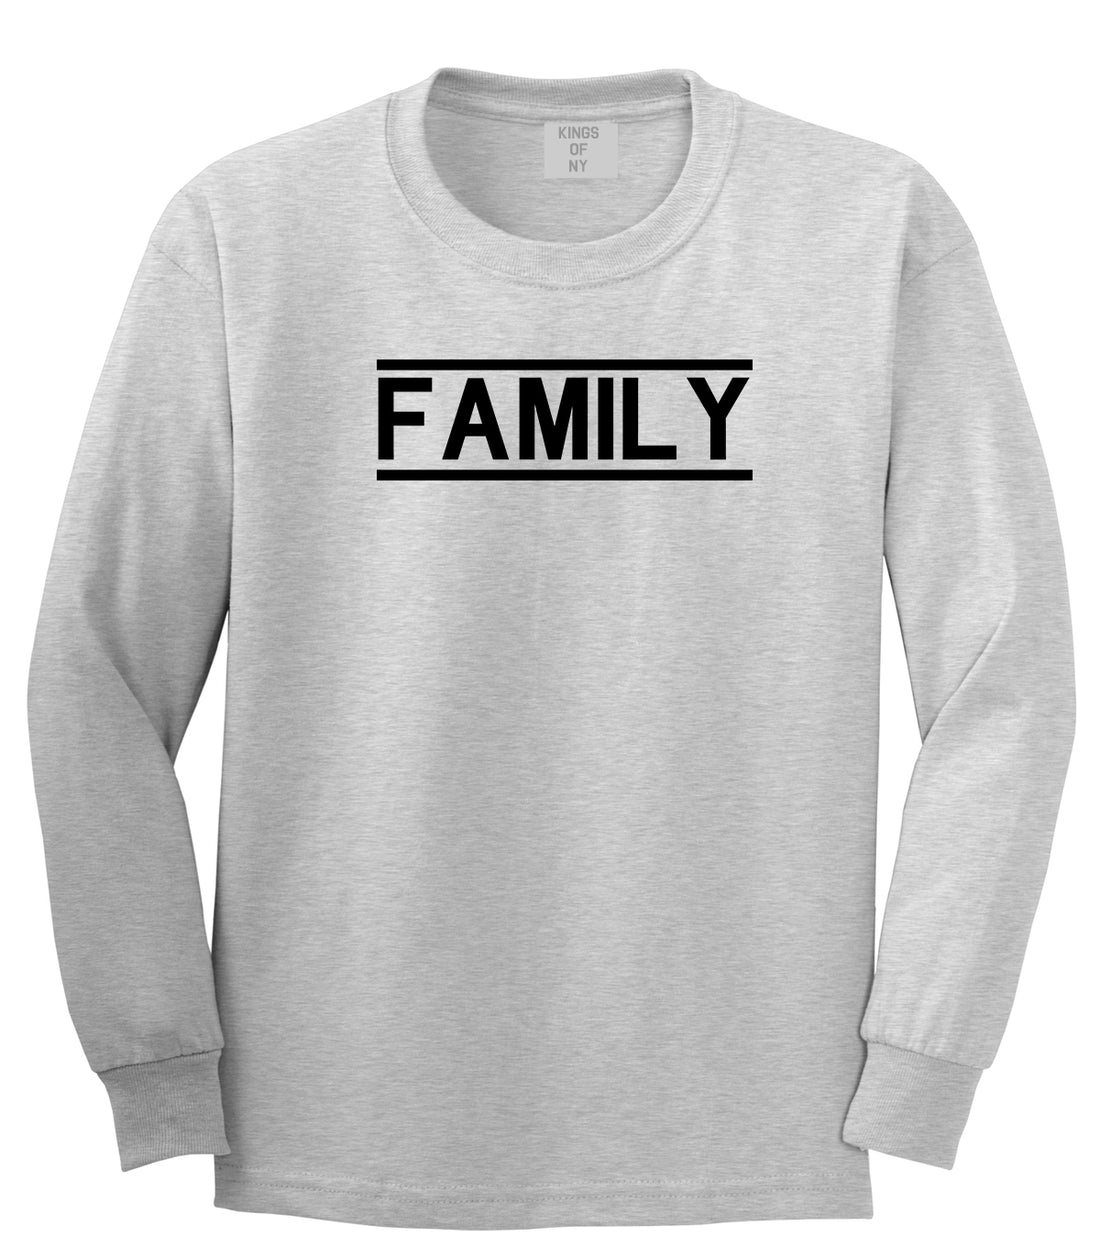 Family Fam Squad Mens Grey Long Sleeve T-Shirt by KINGS OF NY